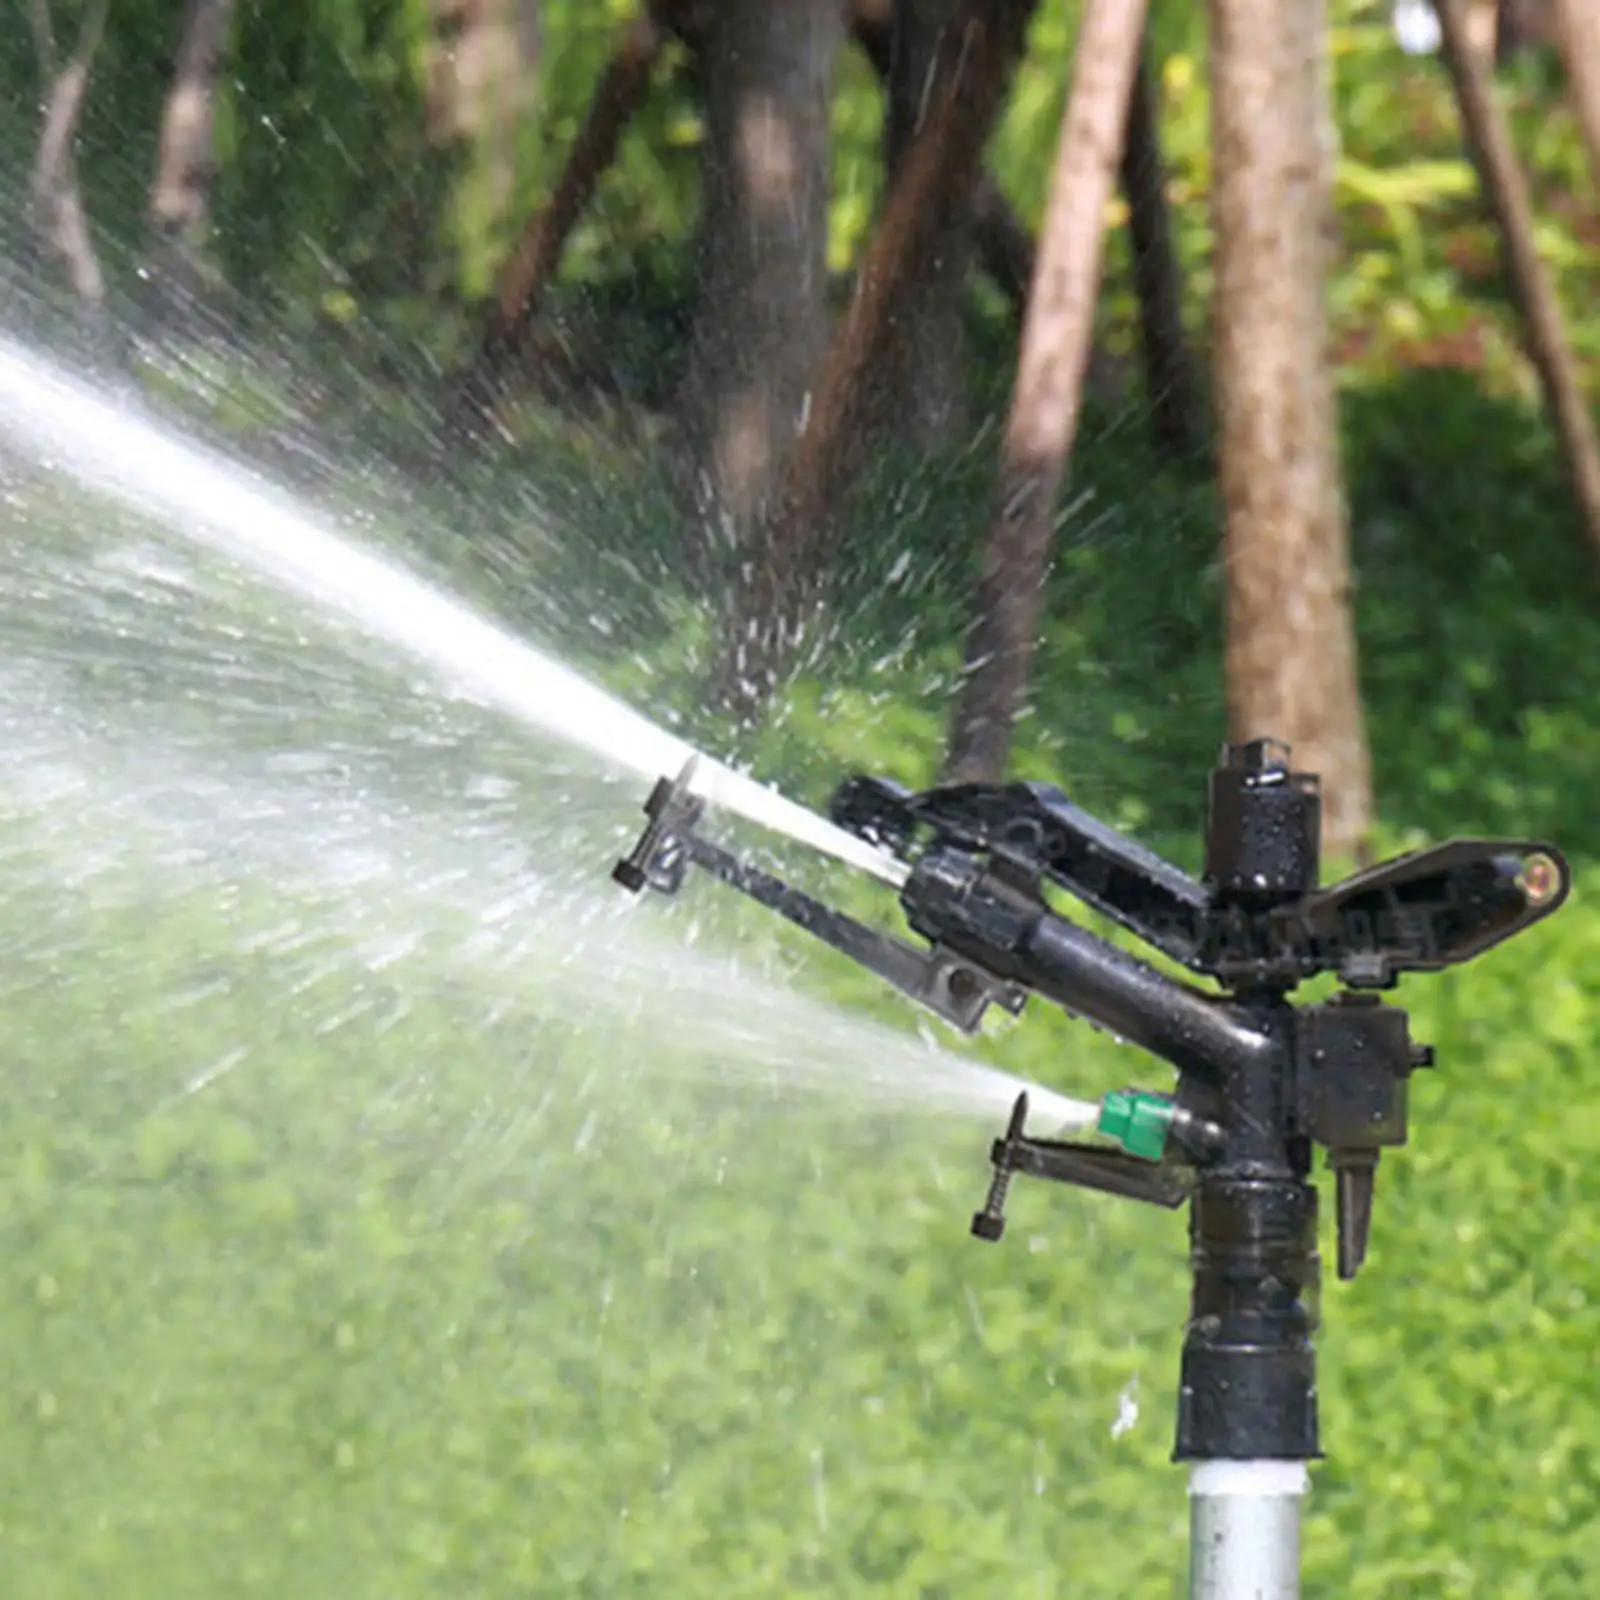 Adjustable Angle Irrigation Sprinkler Large Area Irrigation Gardening Watering System Lawn Sprinkler for Lawn Garden Patio